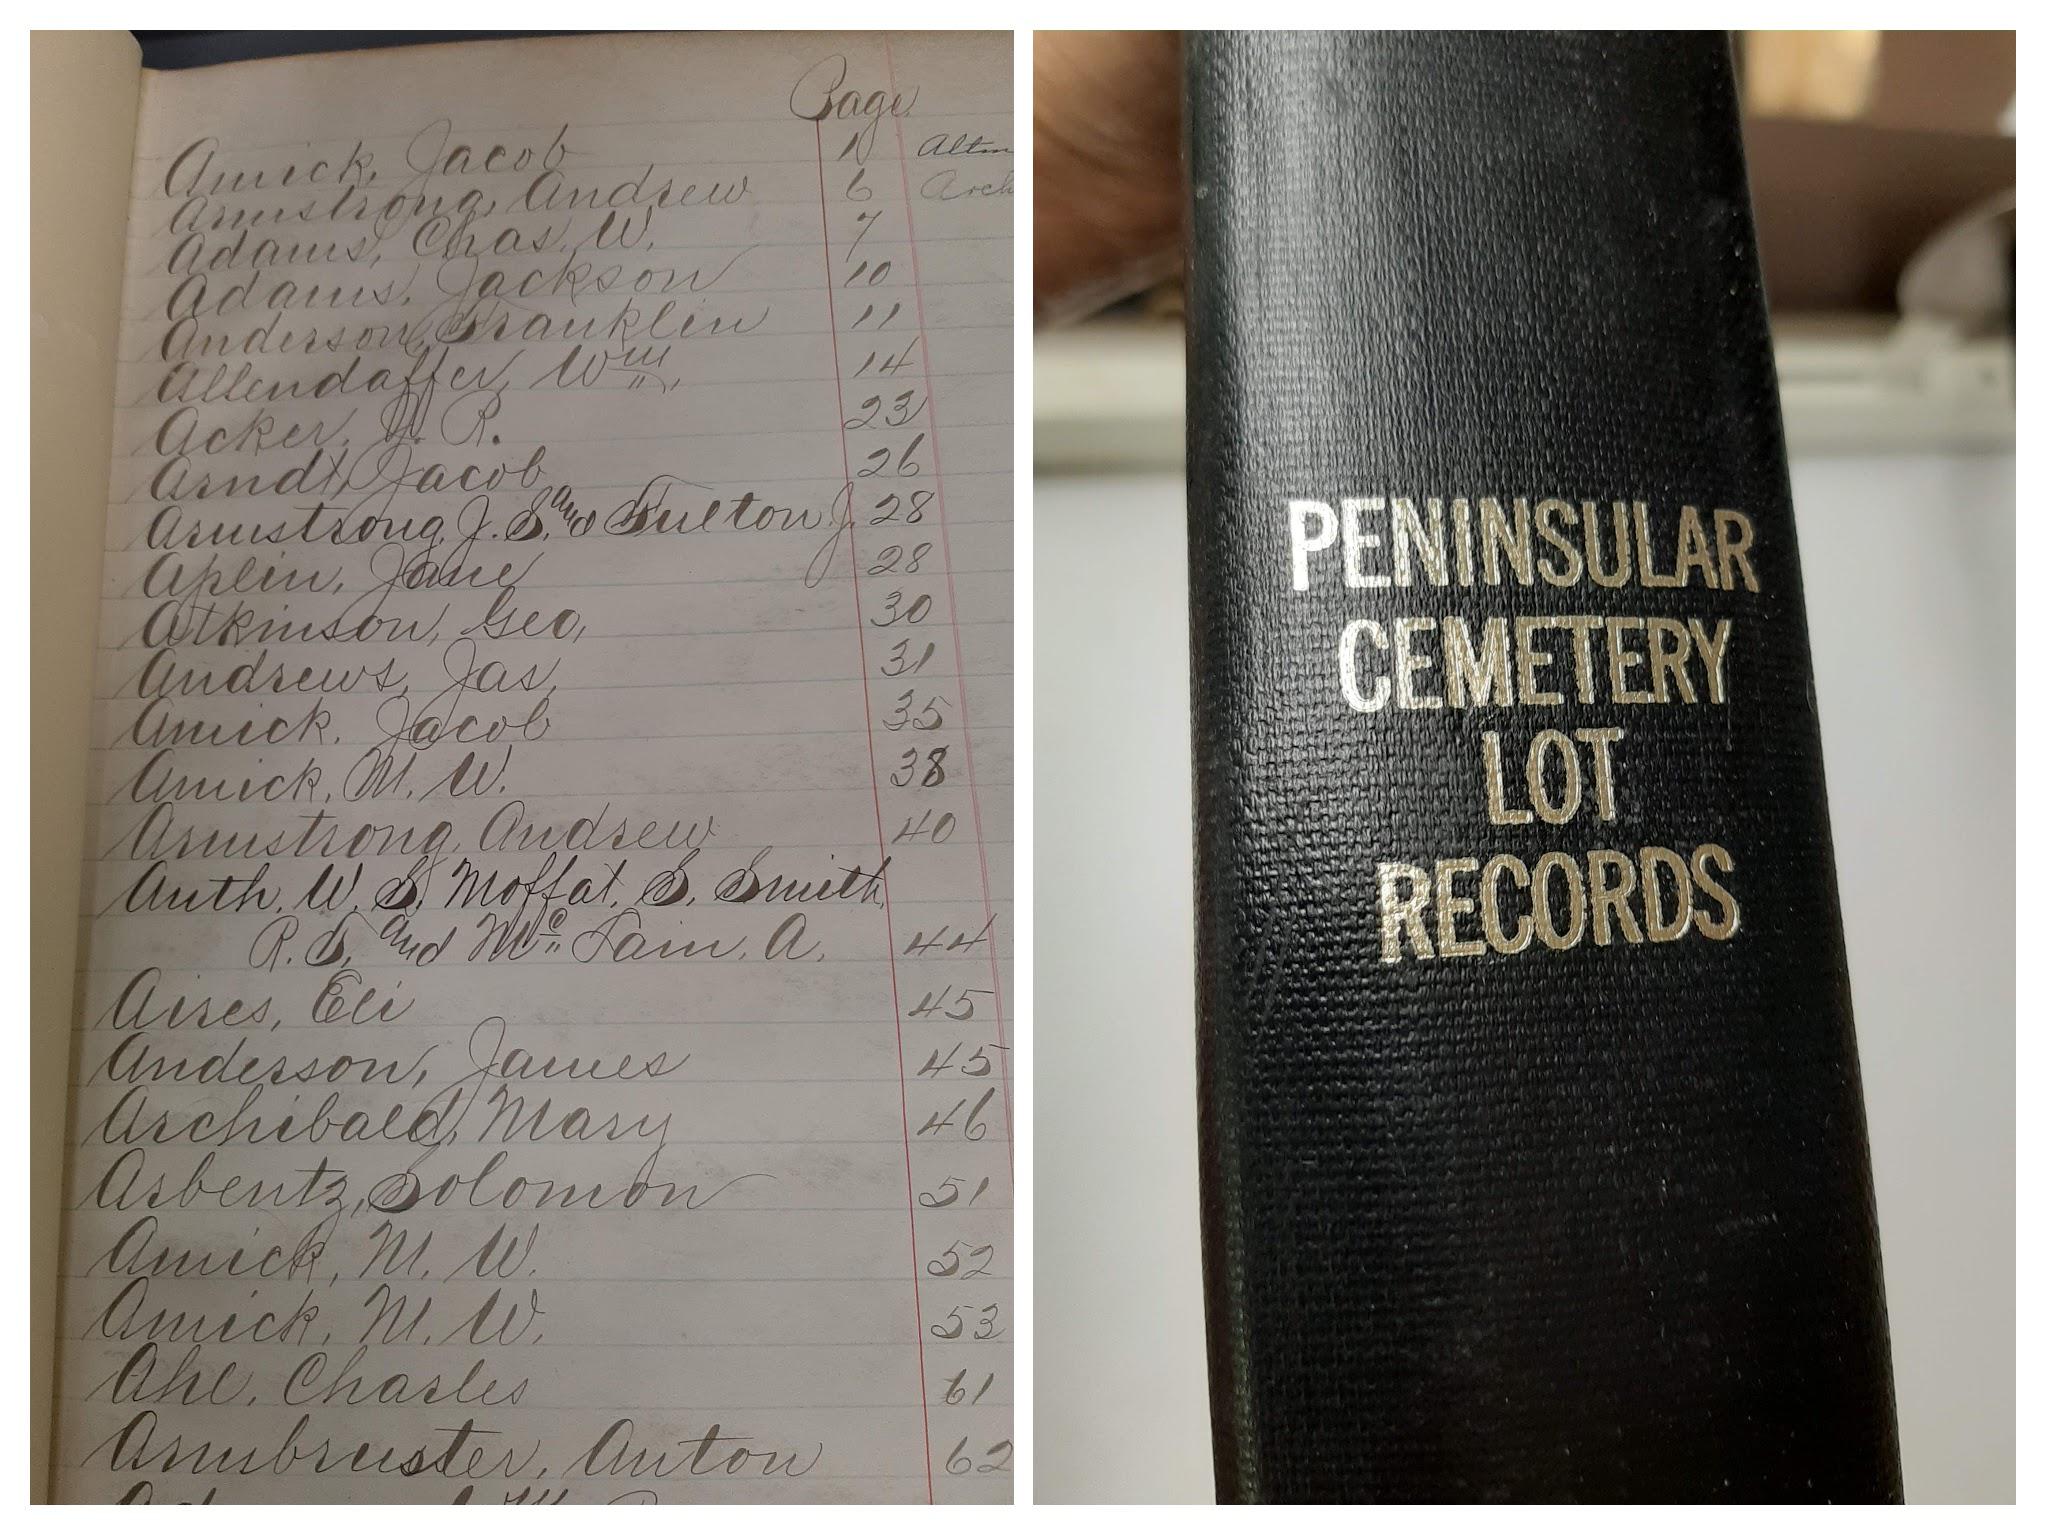 Peninsular Cemetery Lot Record Book, OCPL Archives